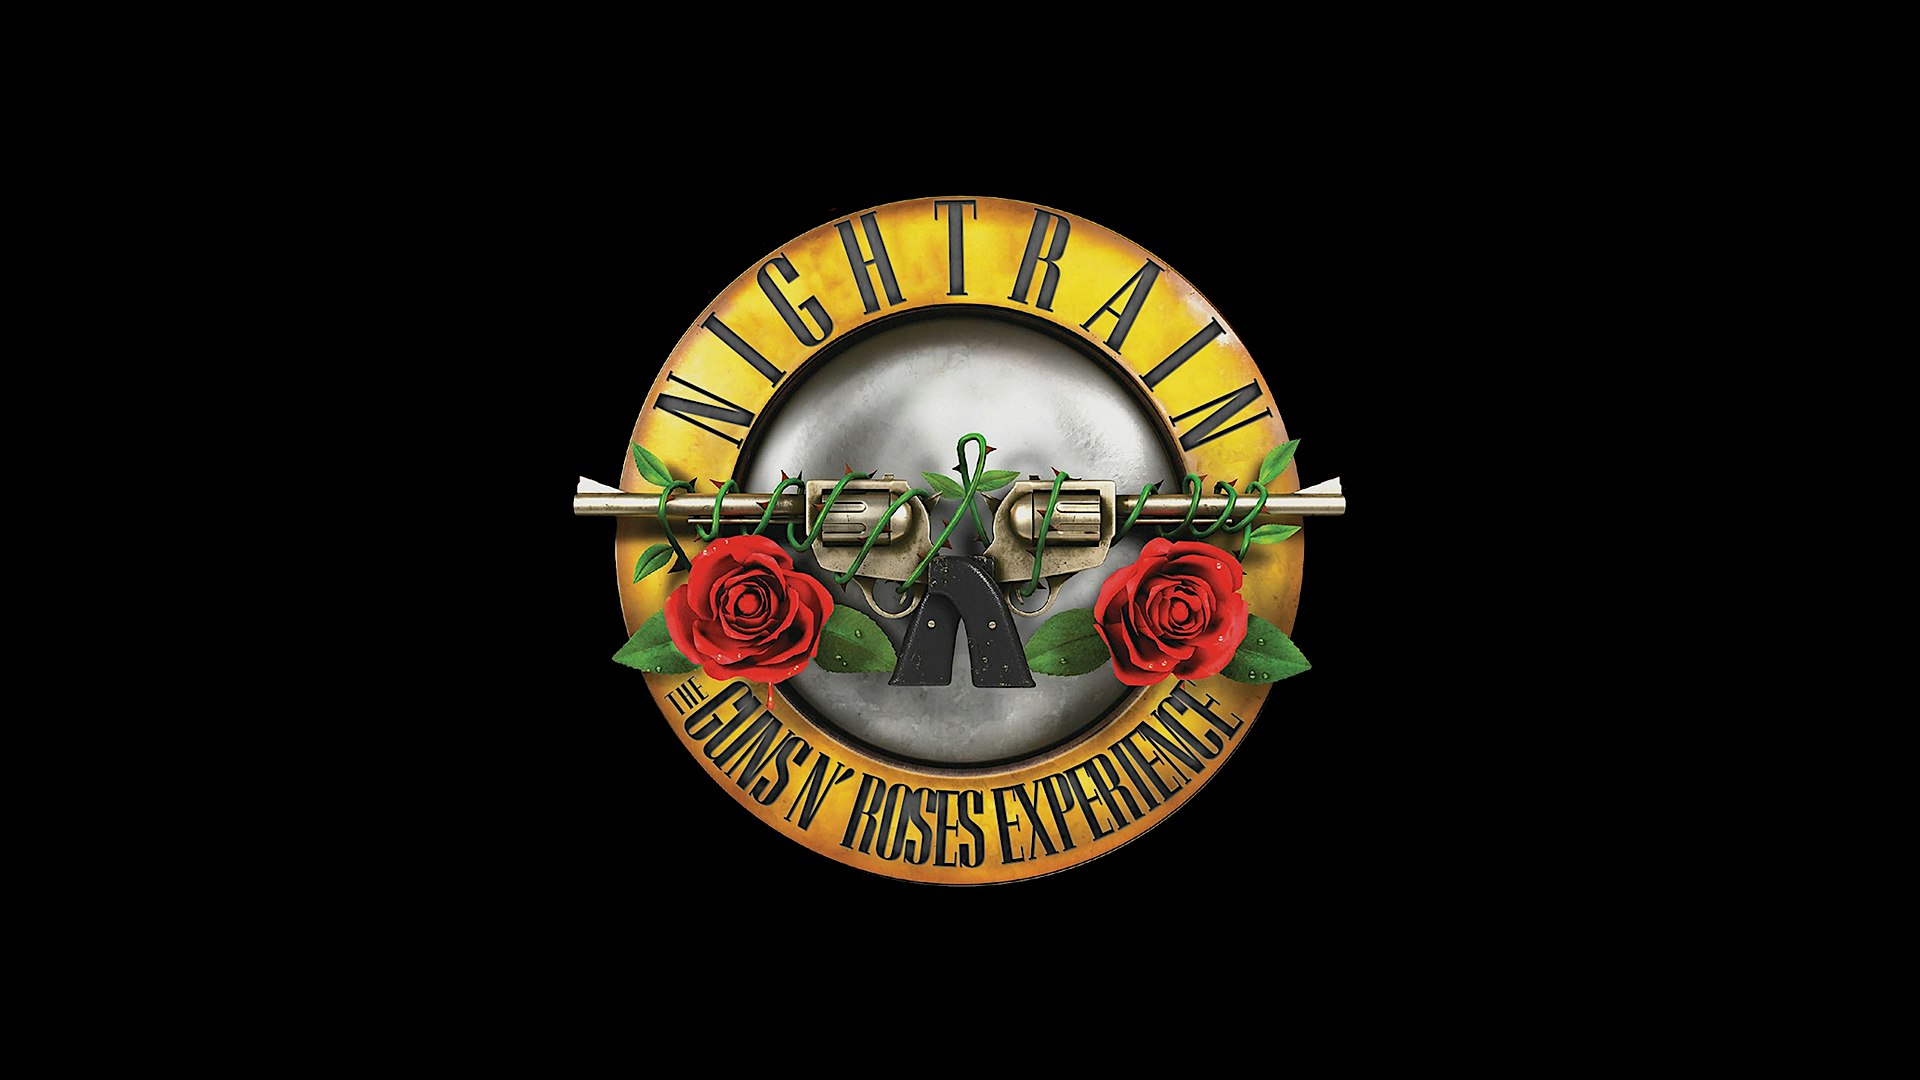 Nightrain- The Guns N Roses Tribute Experience